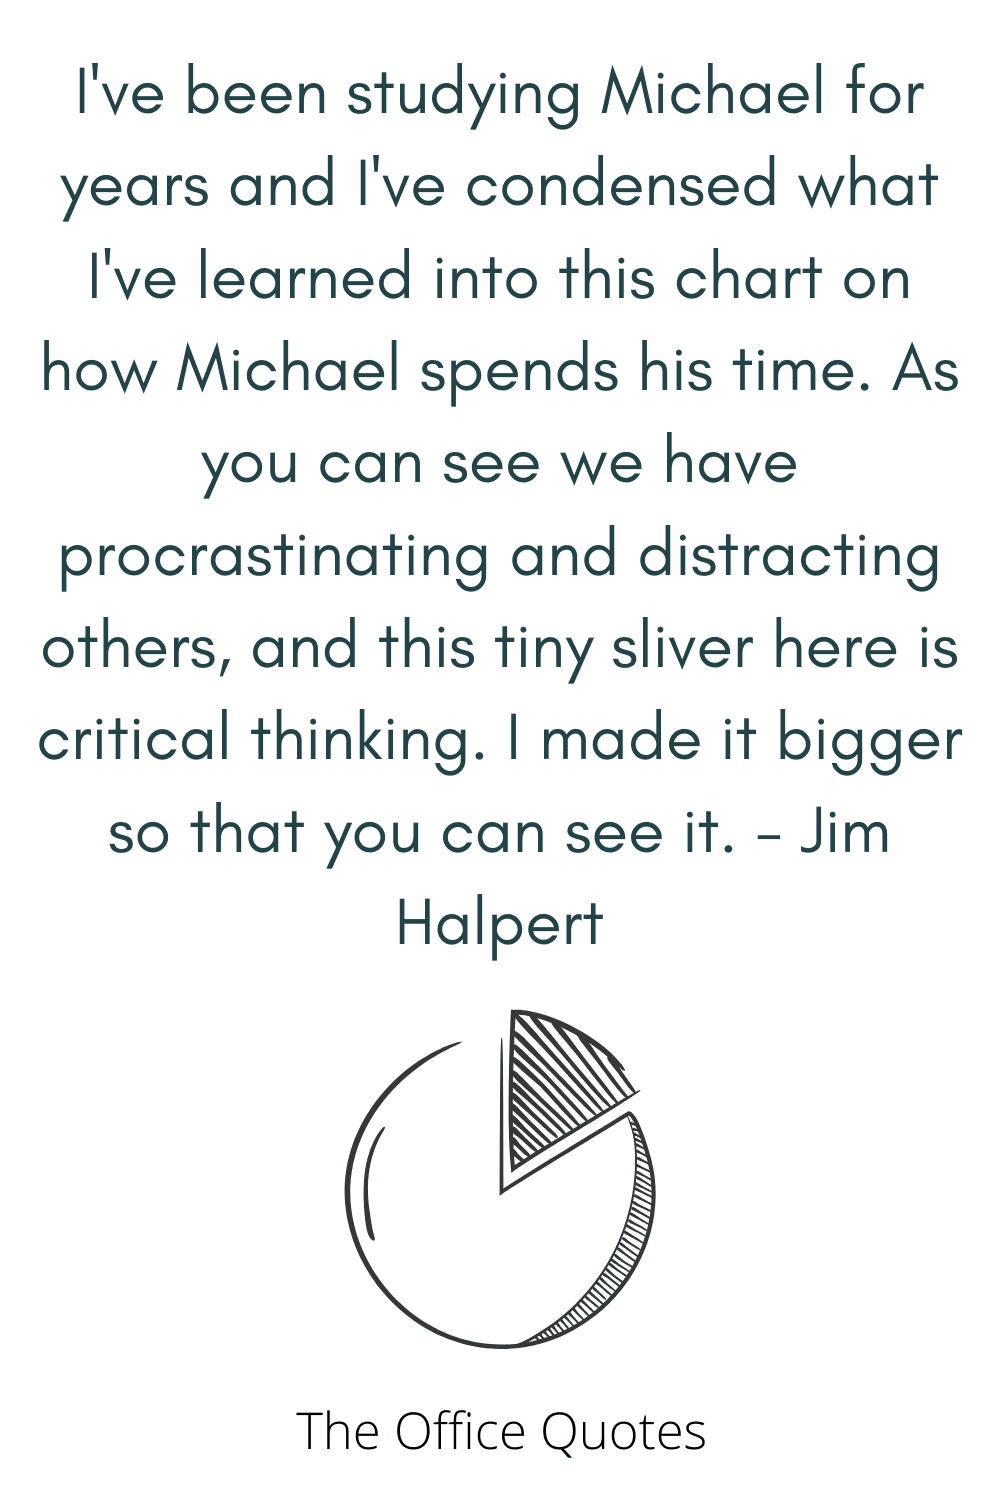 Jim Halpert quote